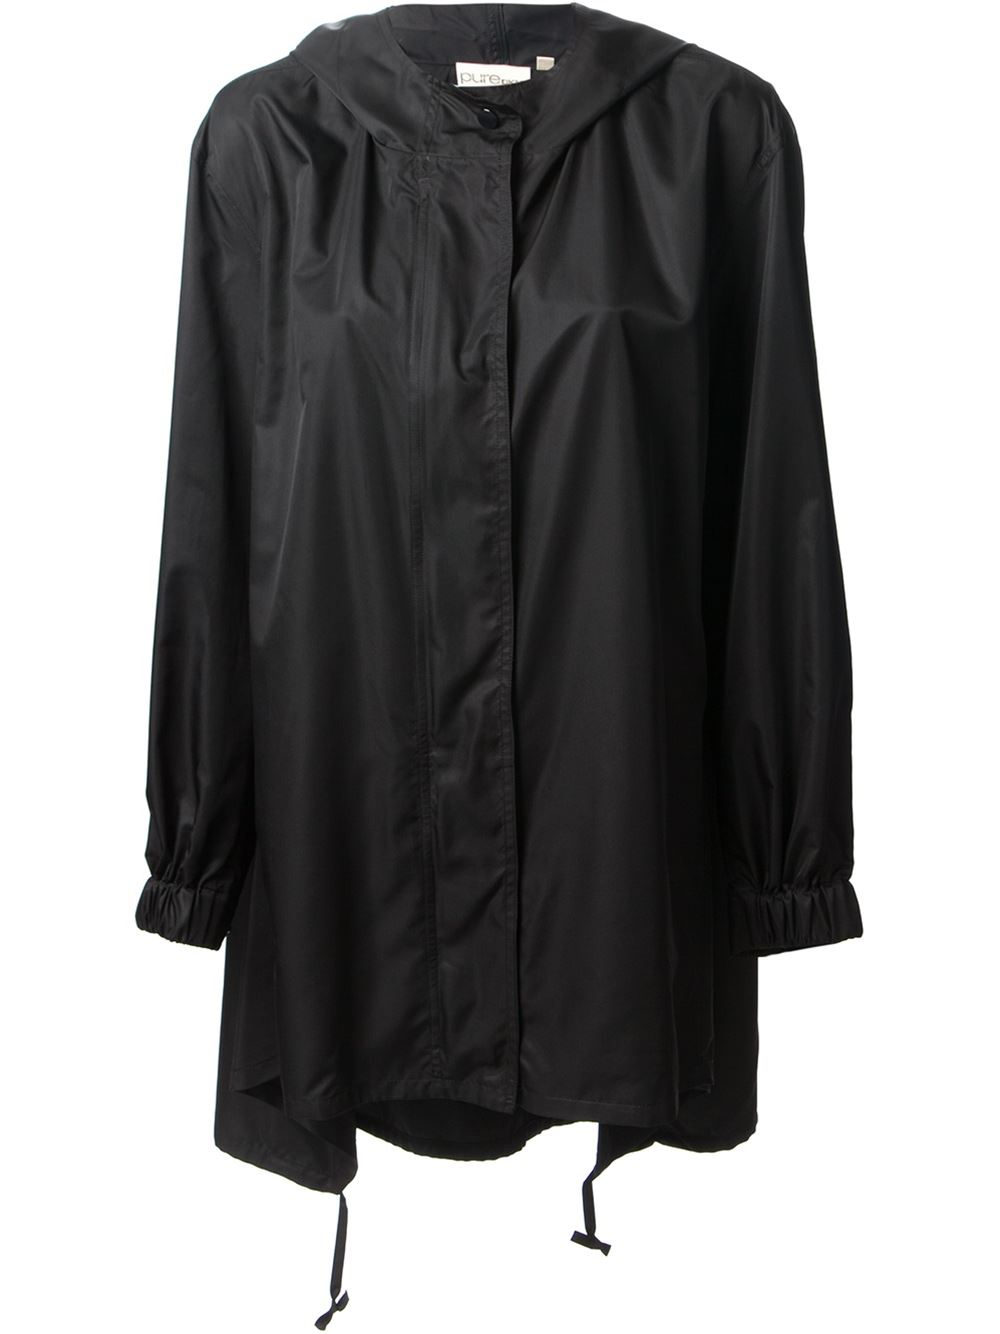 Dkny Hooded Raincoat in Black | Lyst